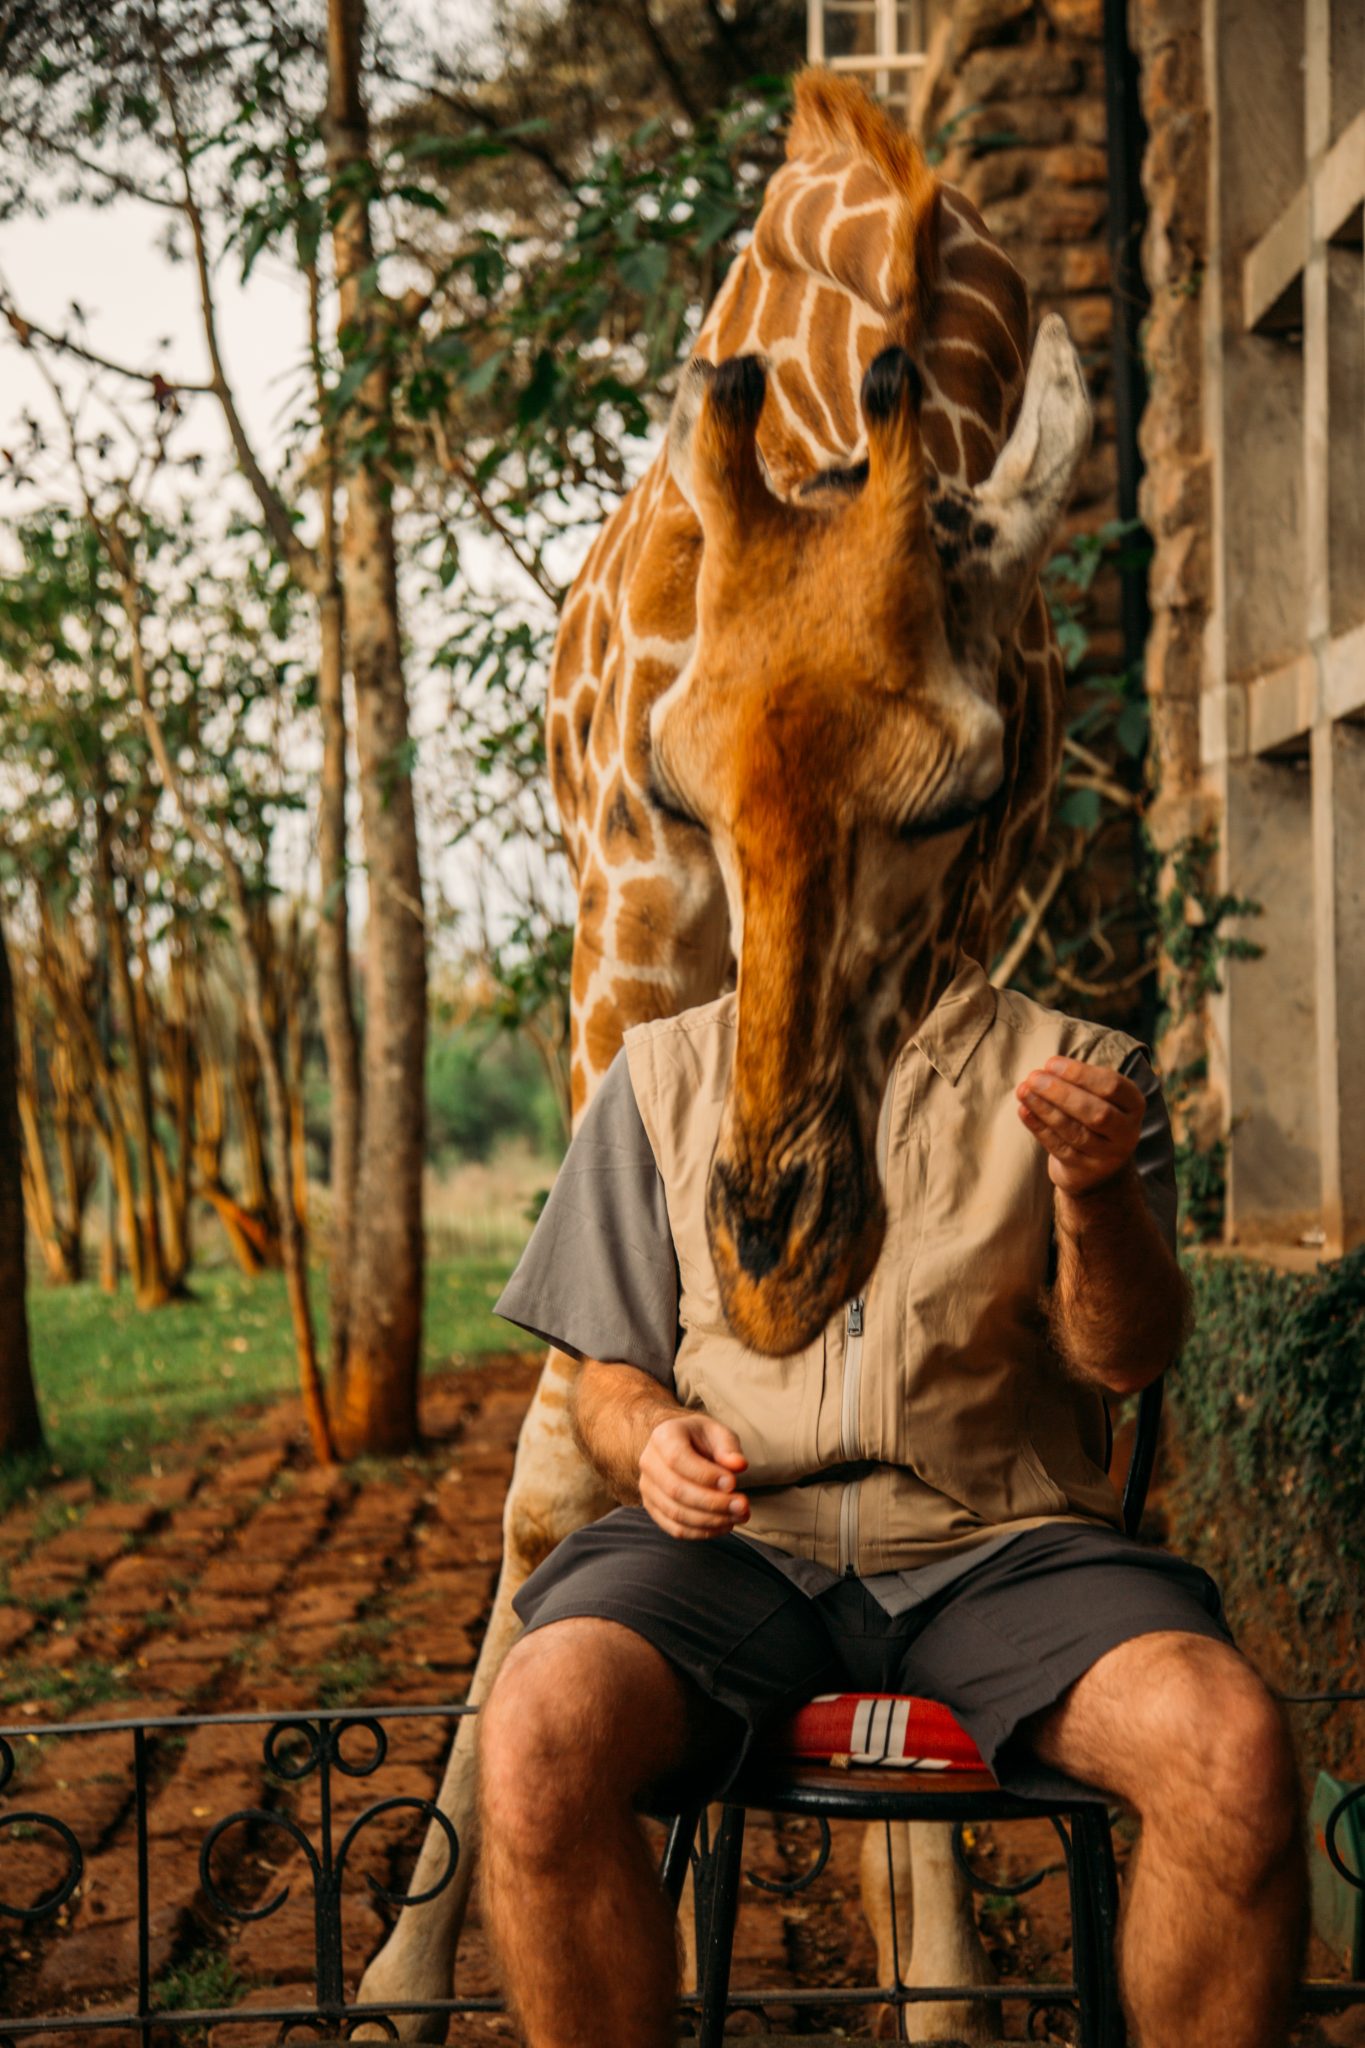 Fun giraffe photos - optical illusion where the giraffe looks like it has a human body